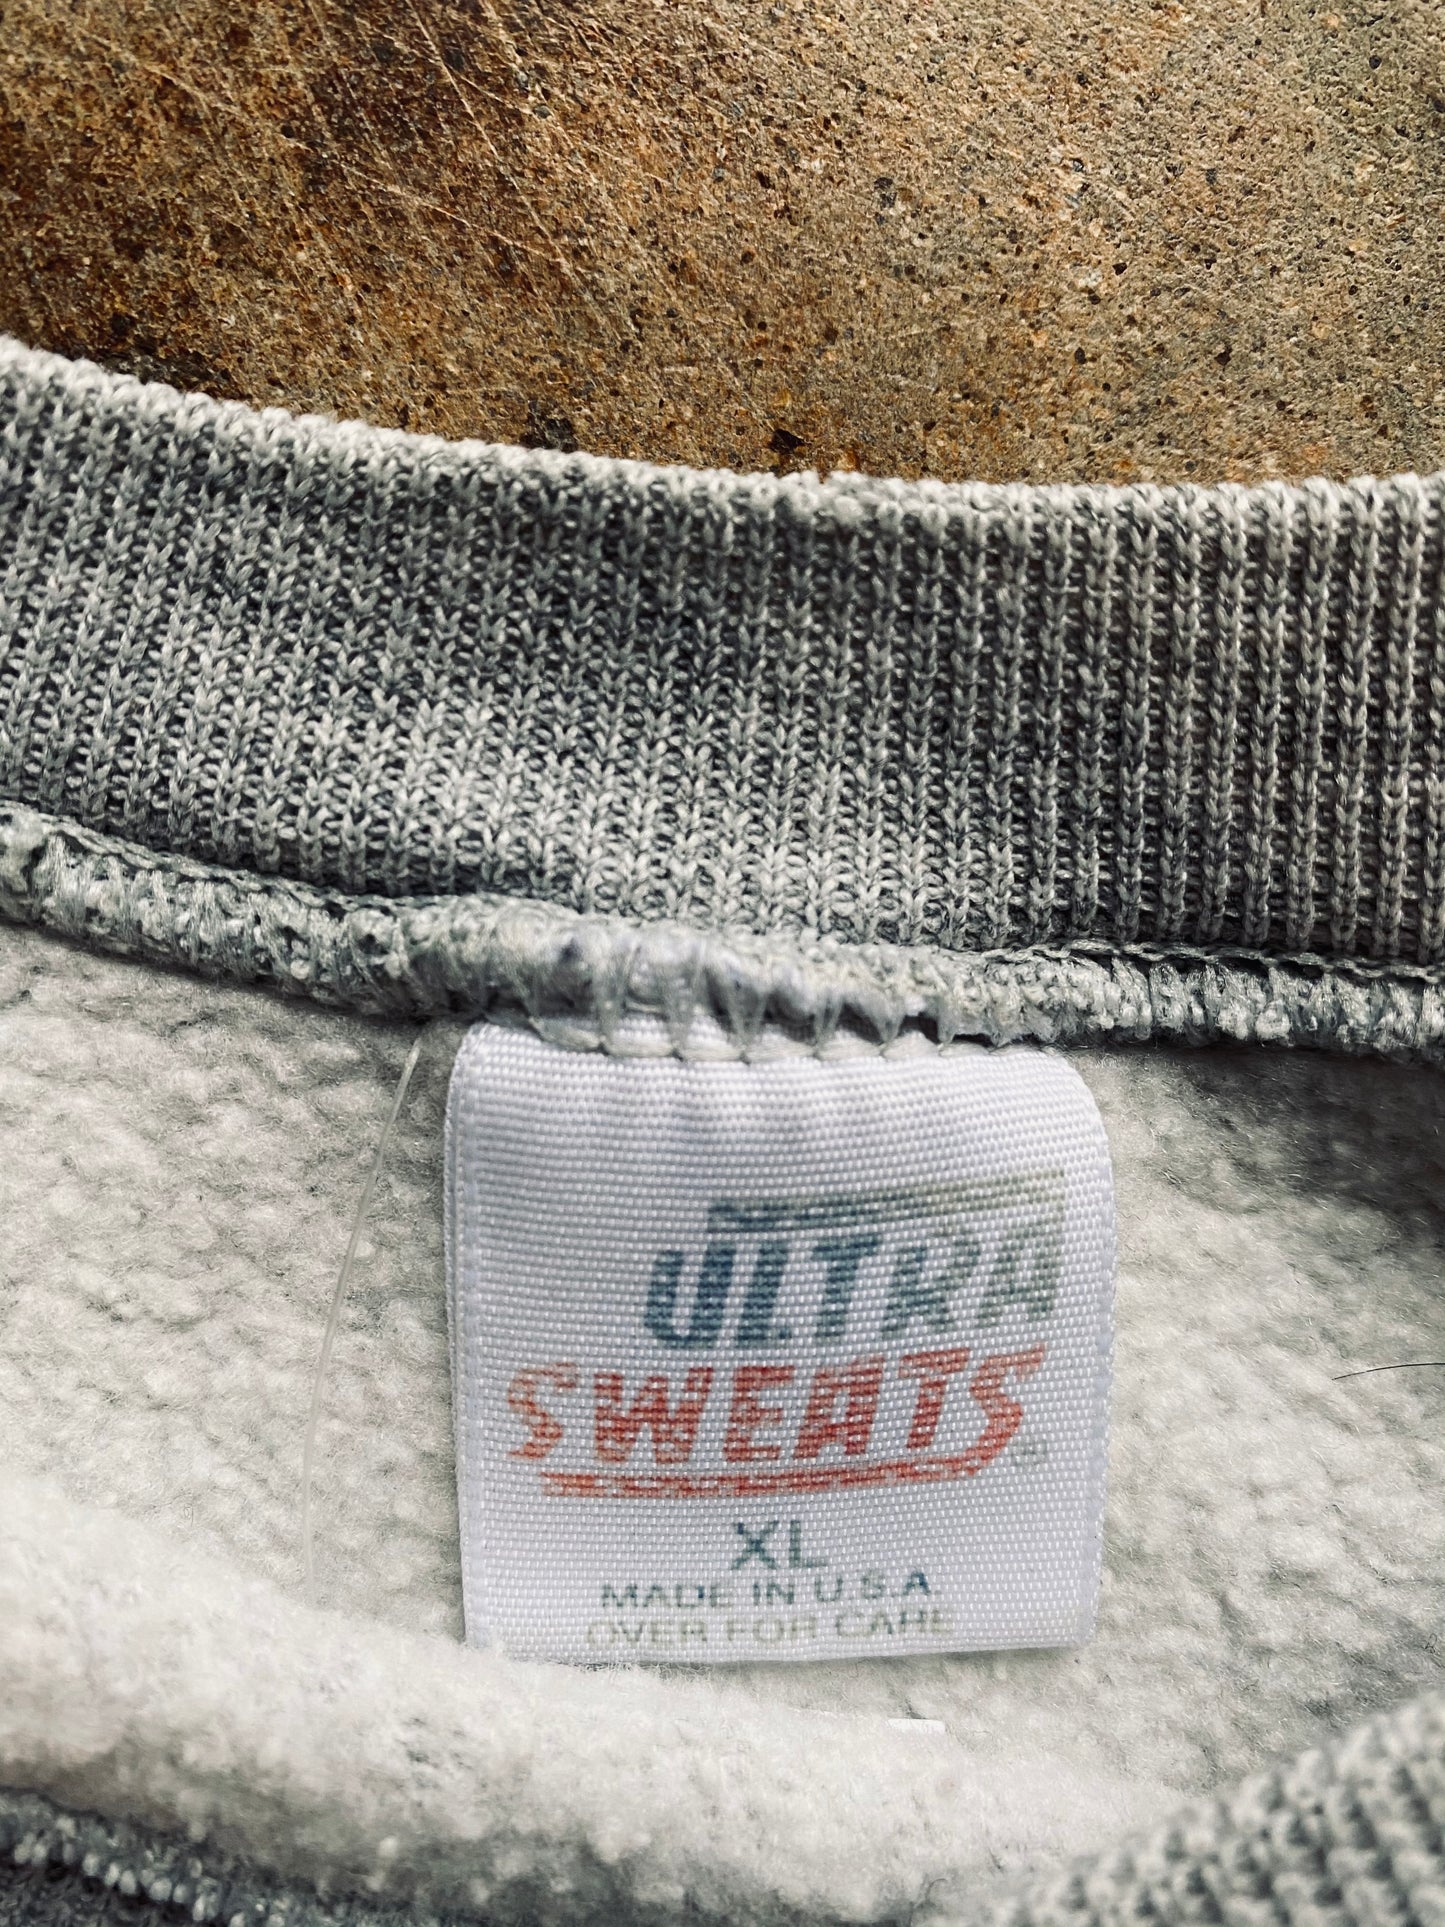 1989 Ultra Sweats “Great Alaska Shootout” Sweatshirt